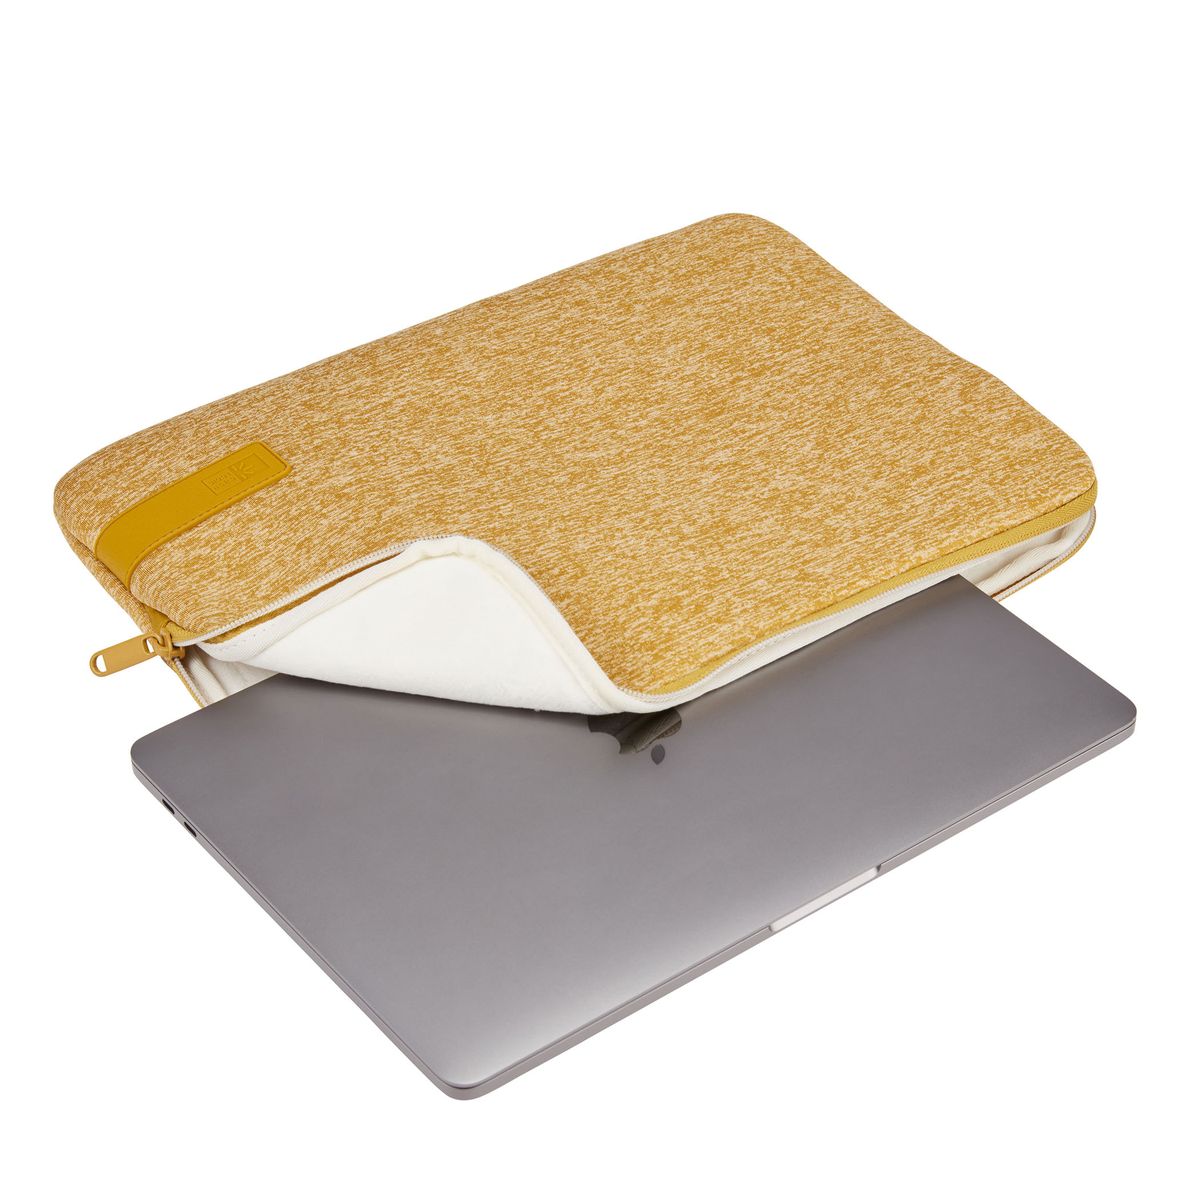 Case Logic Reflect MacBook Pro® Sleeve 13" MacBook Pro® sleeve